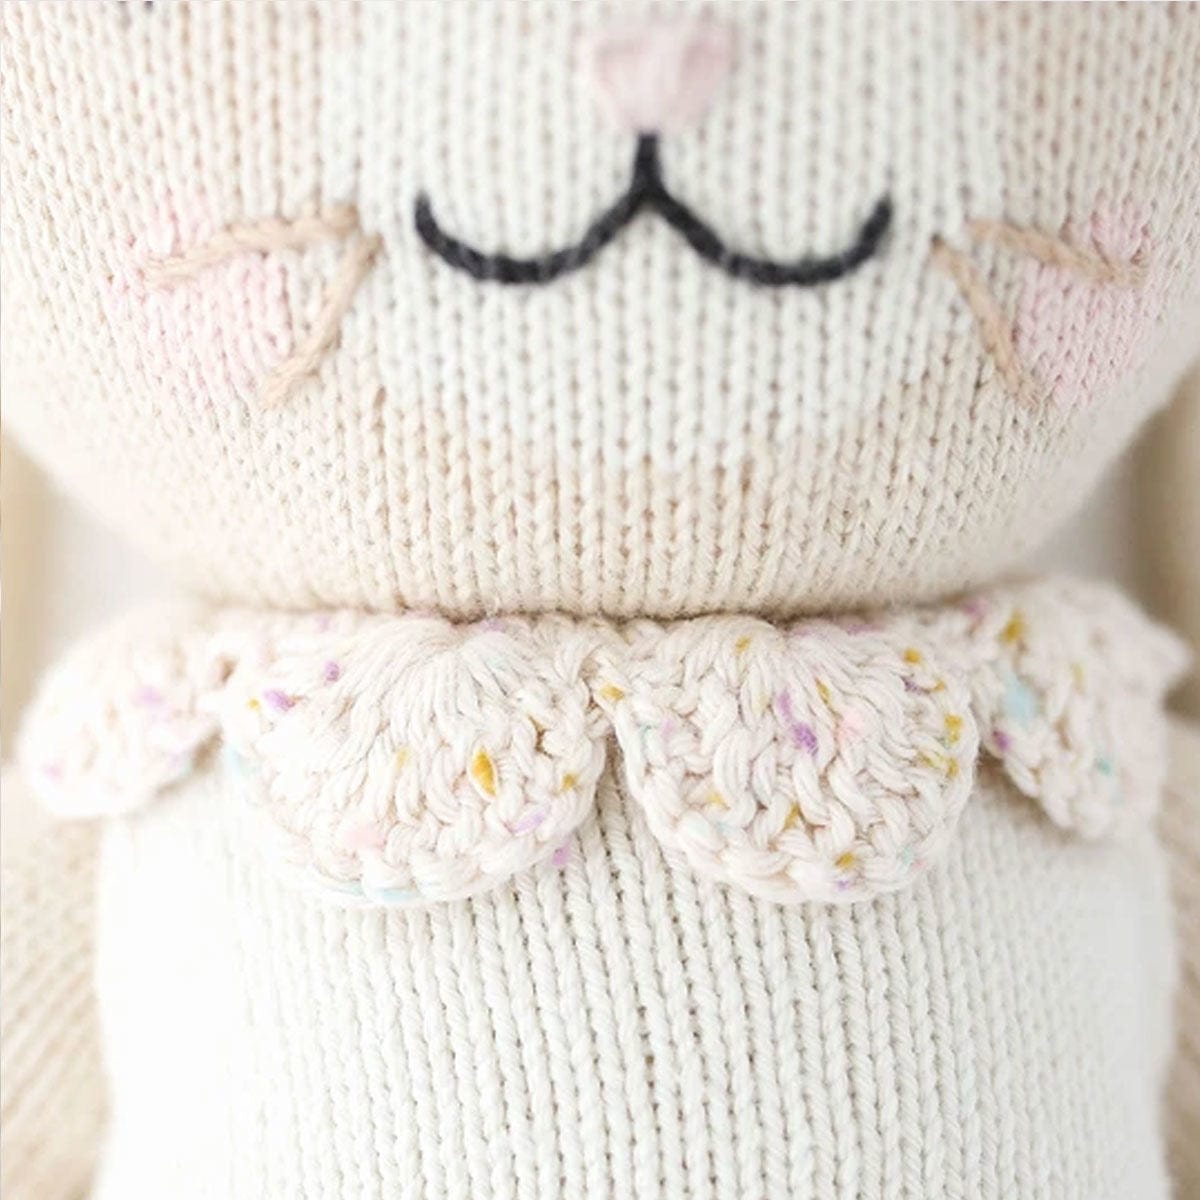 cuddle + kind doll cuddle + kind Hand-Knit Doll - Hannah the Bunny (Ivory)